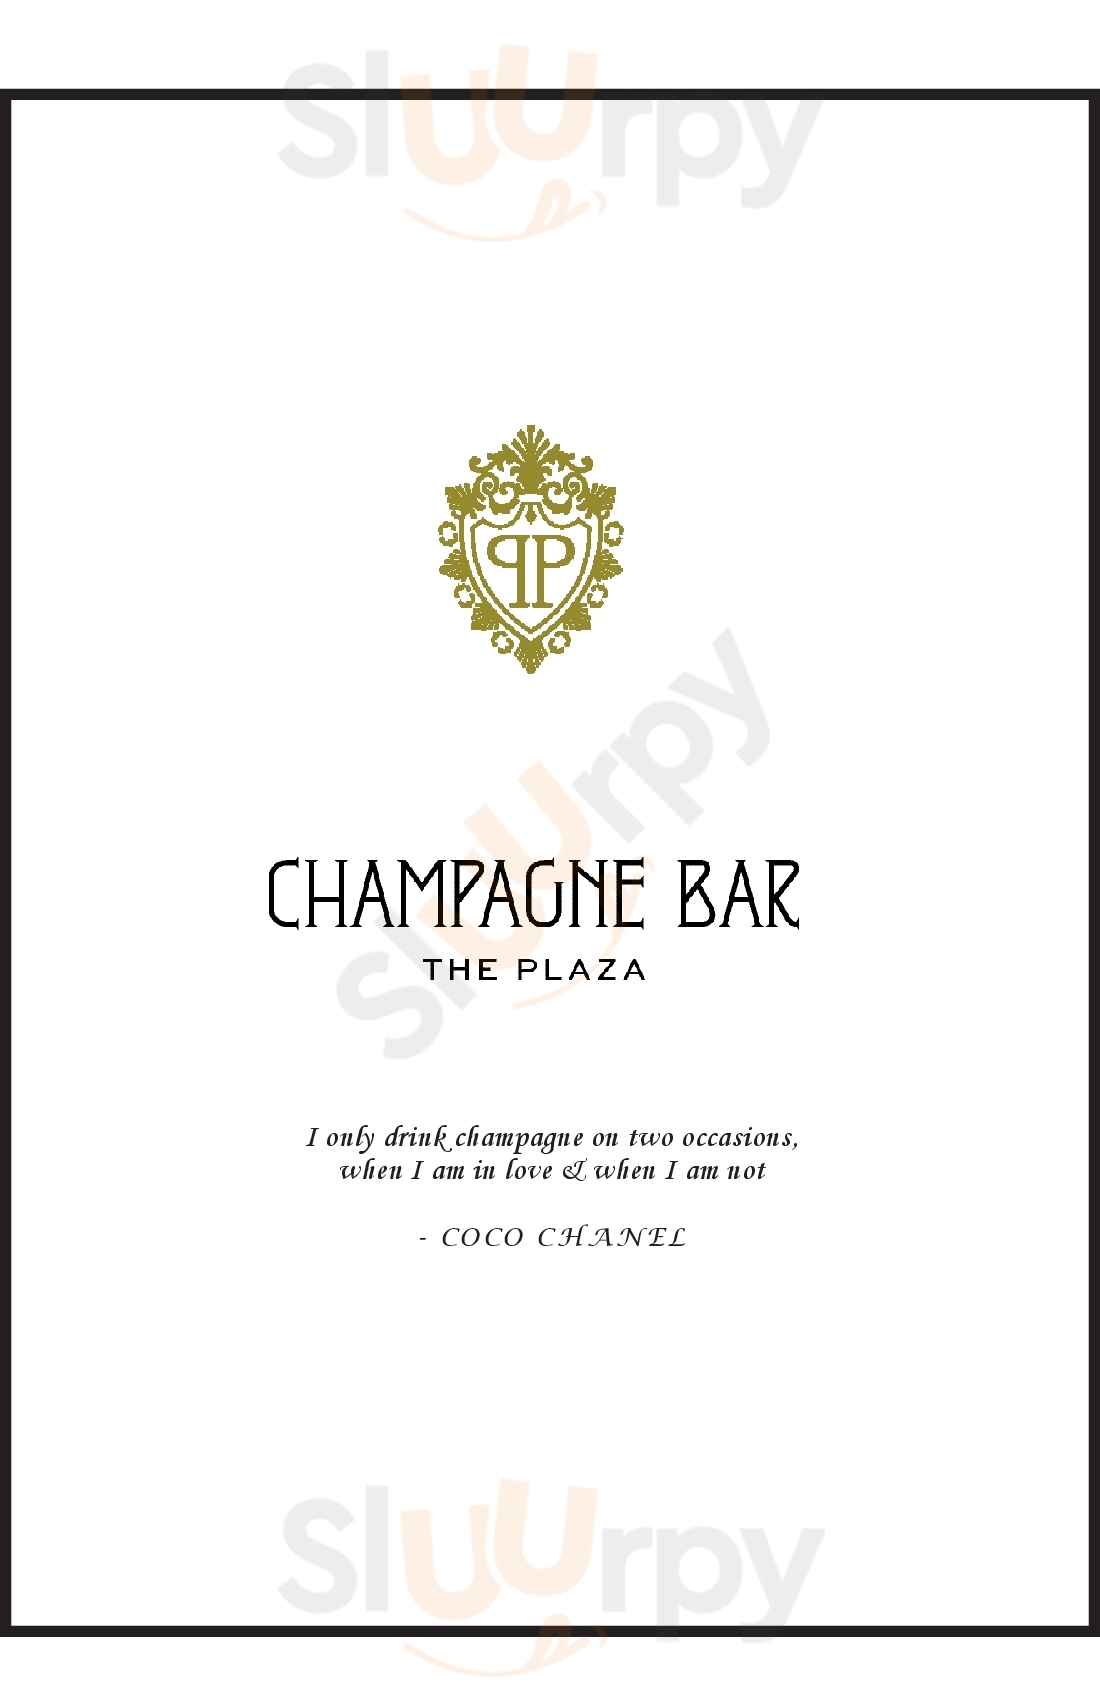 The Champagne Bar New York City Menu - 1